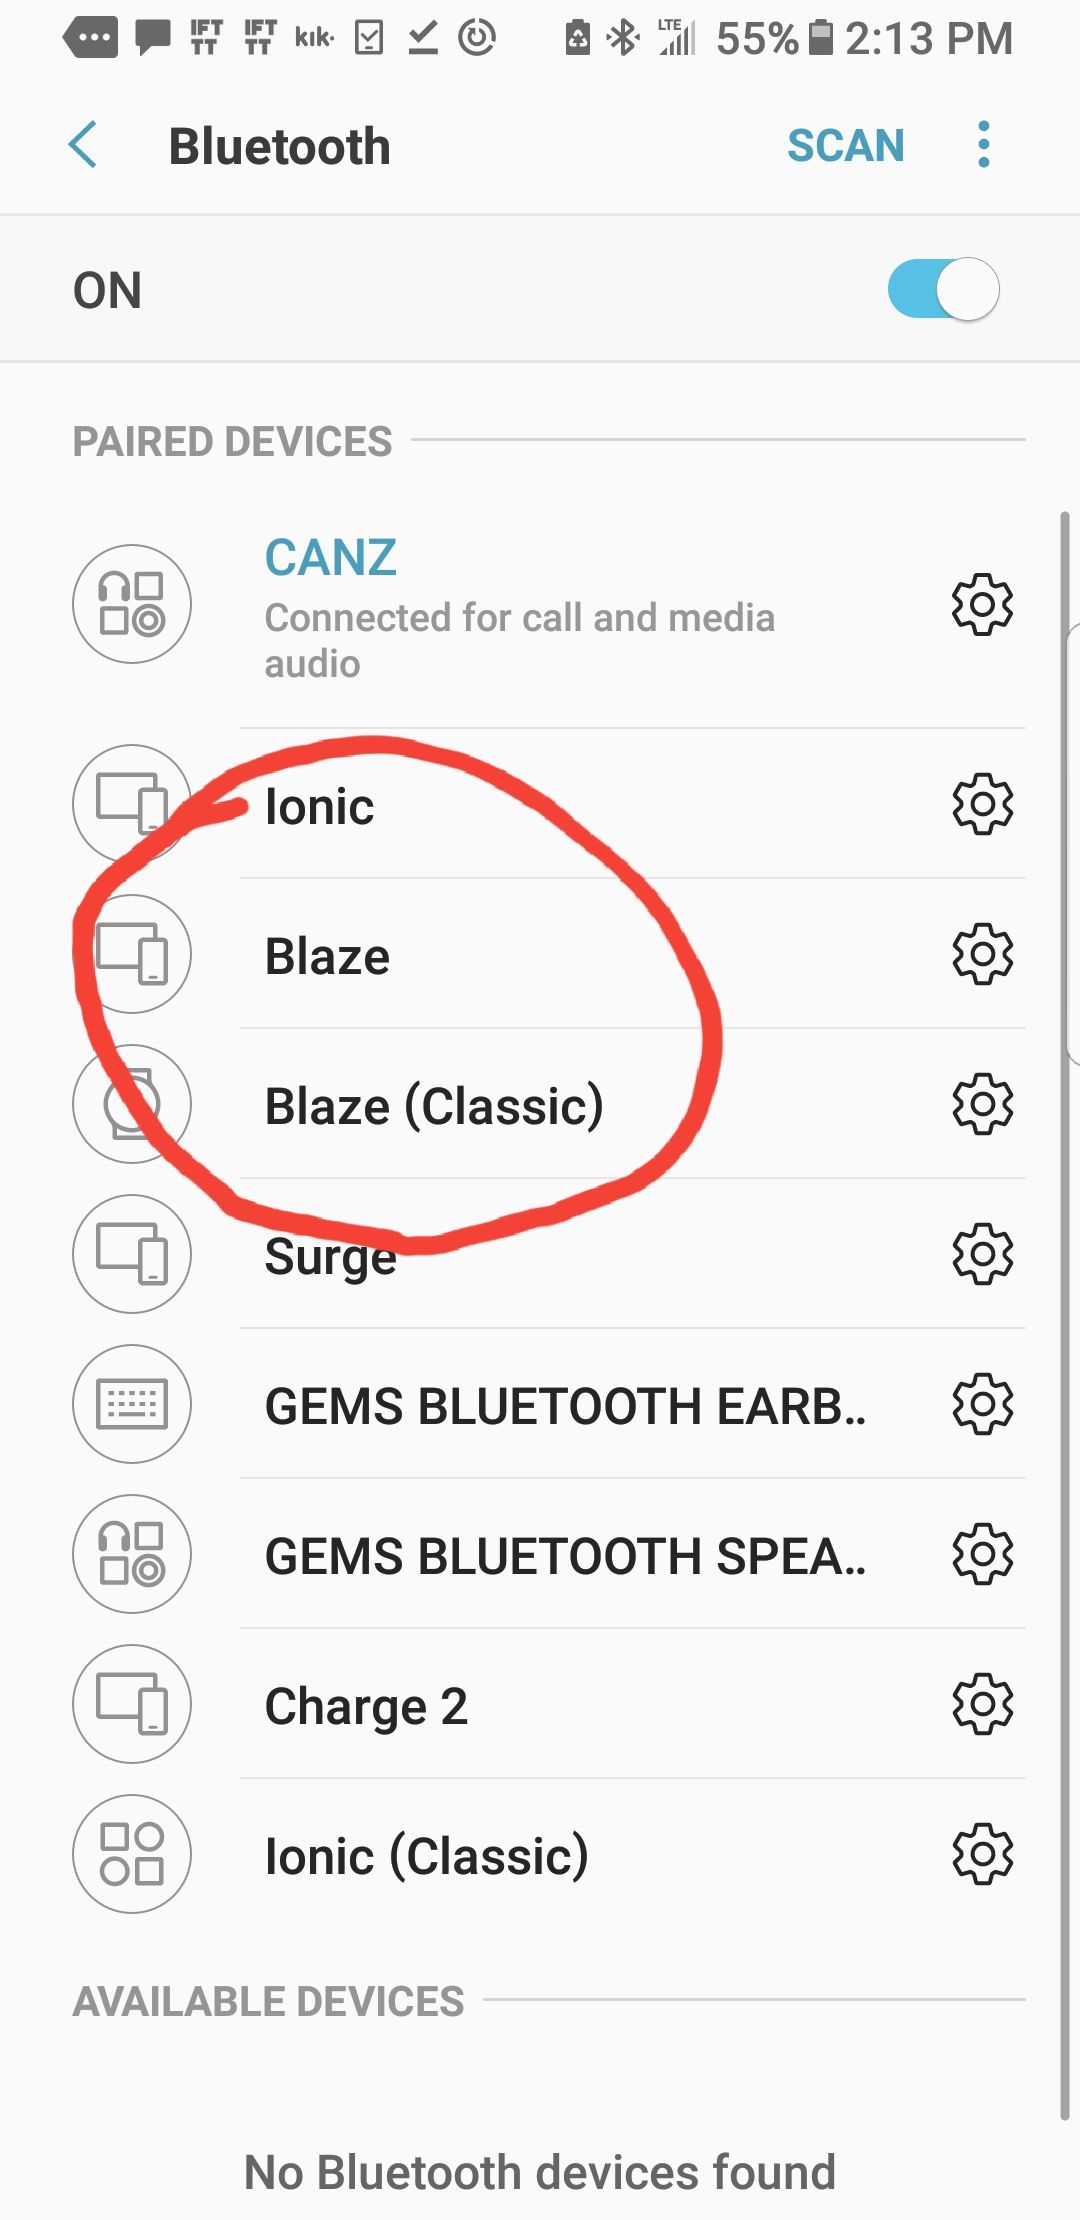 blaze bluetooth classic